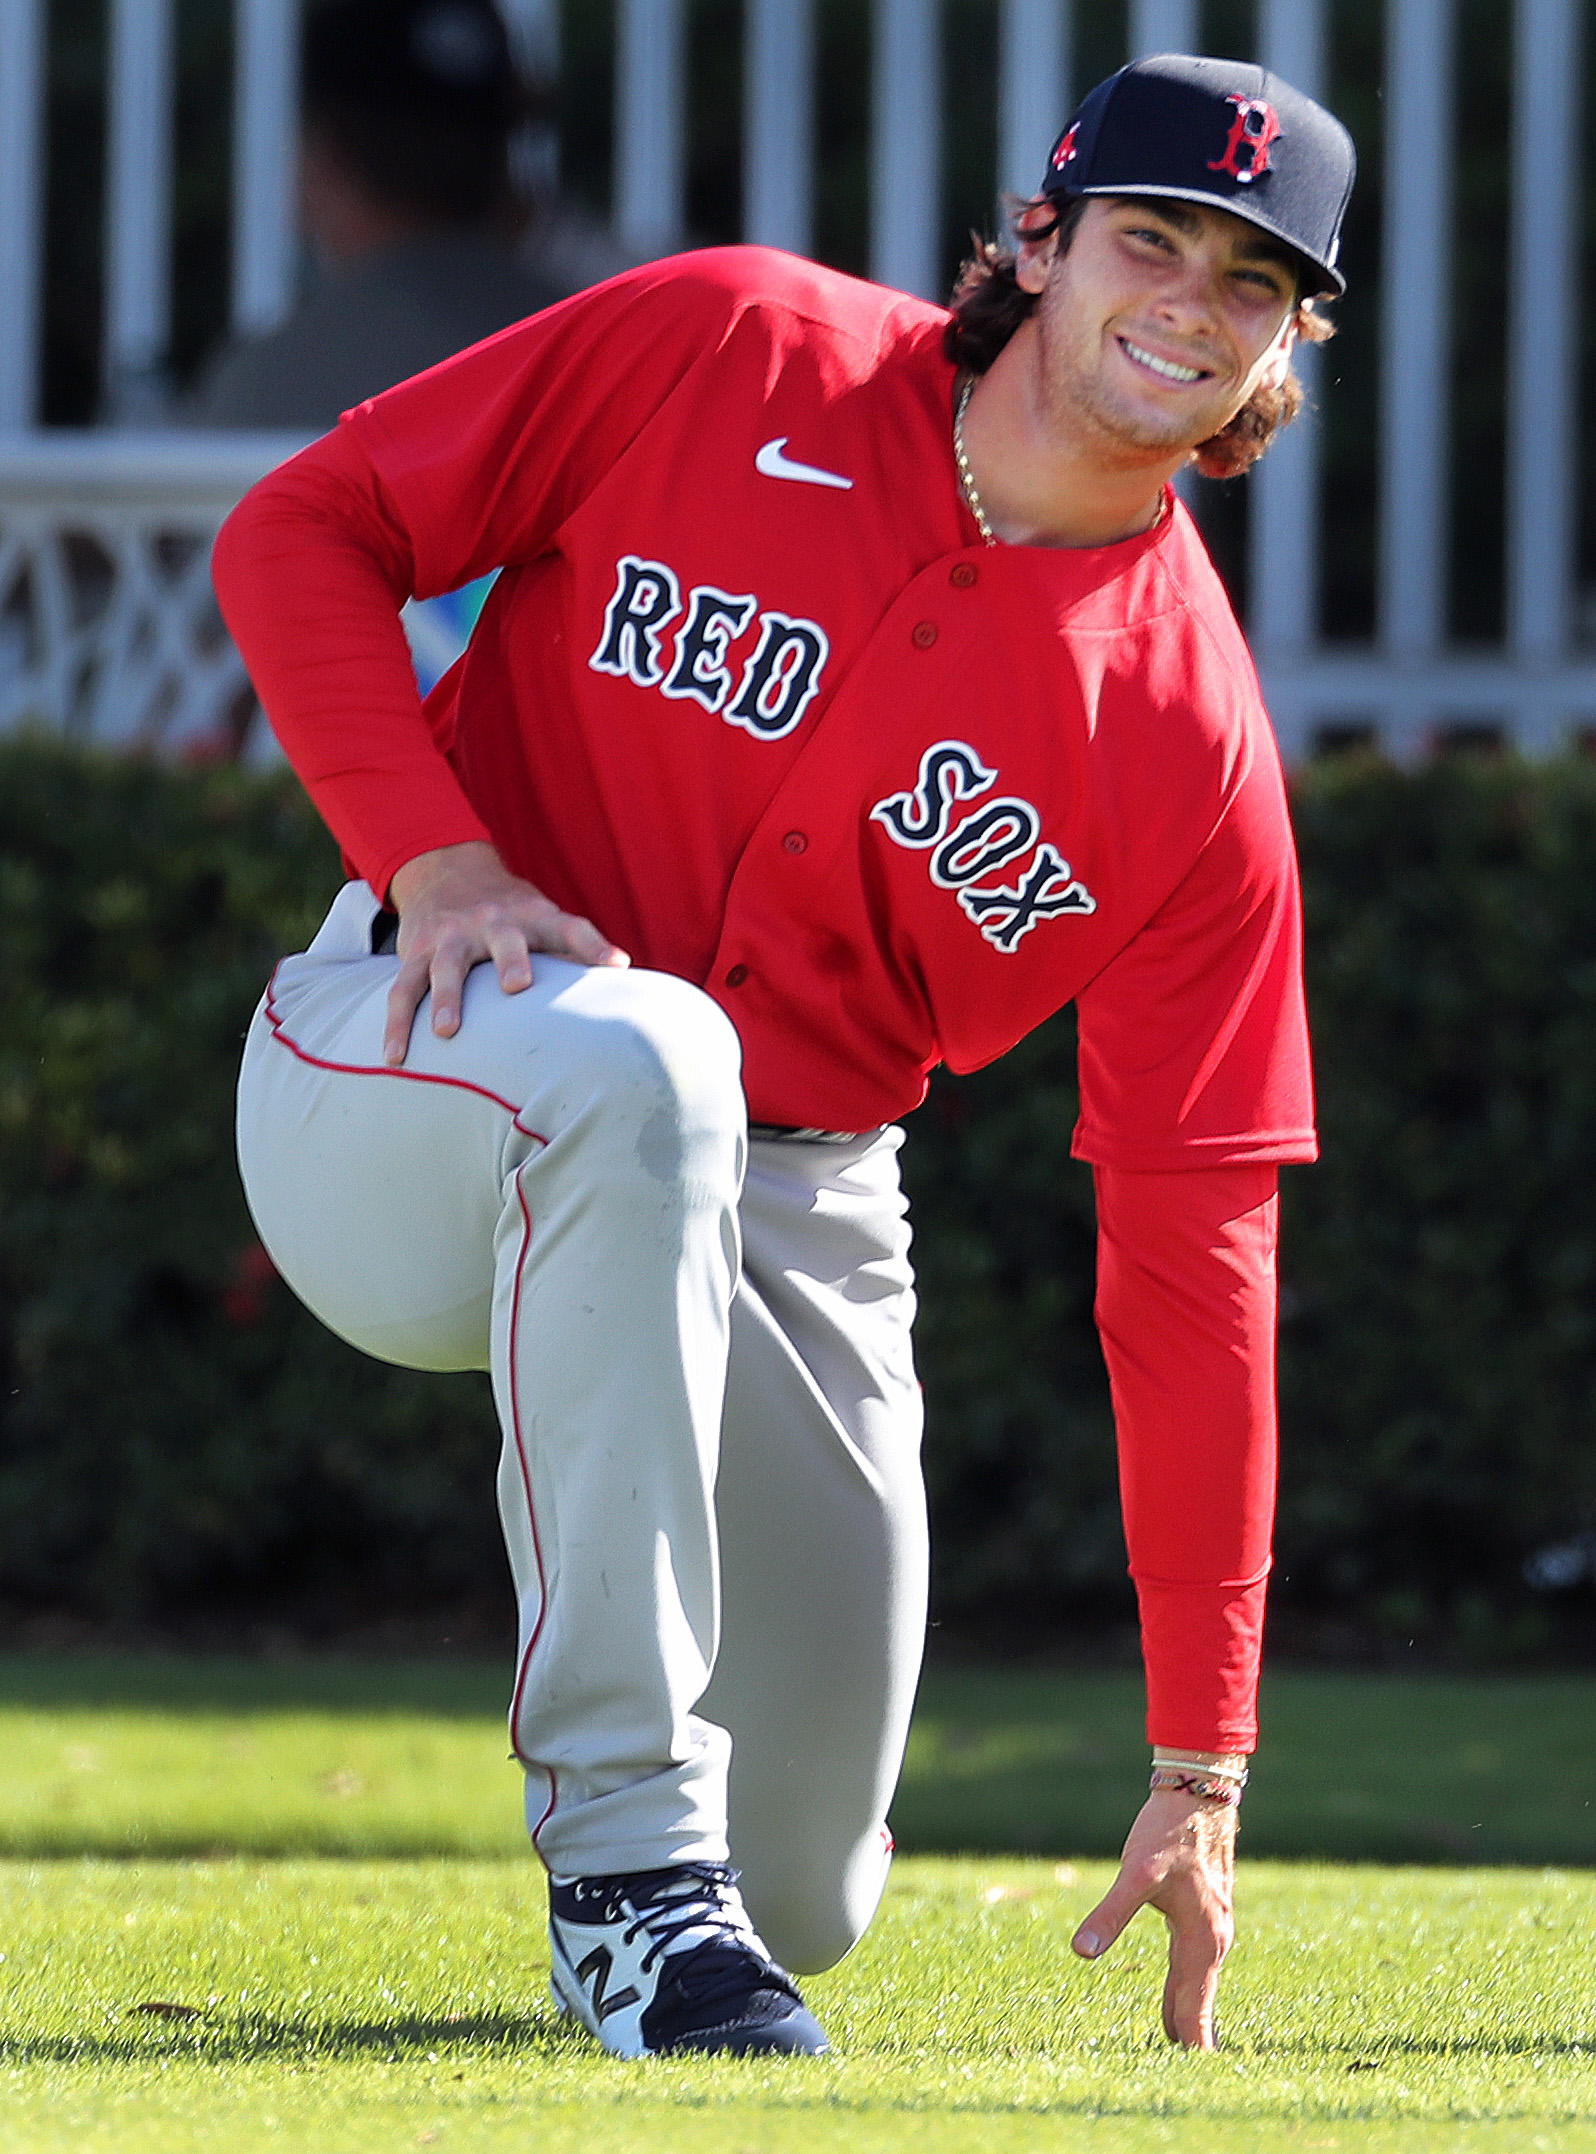 Ipeepz Triston Casas Boston Red Sox MLB Players Shirt